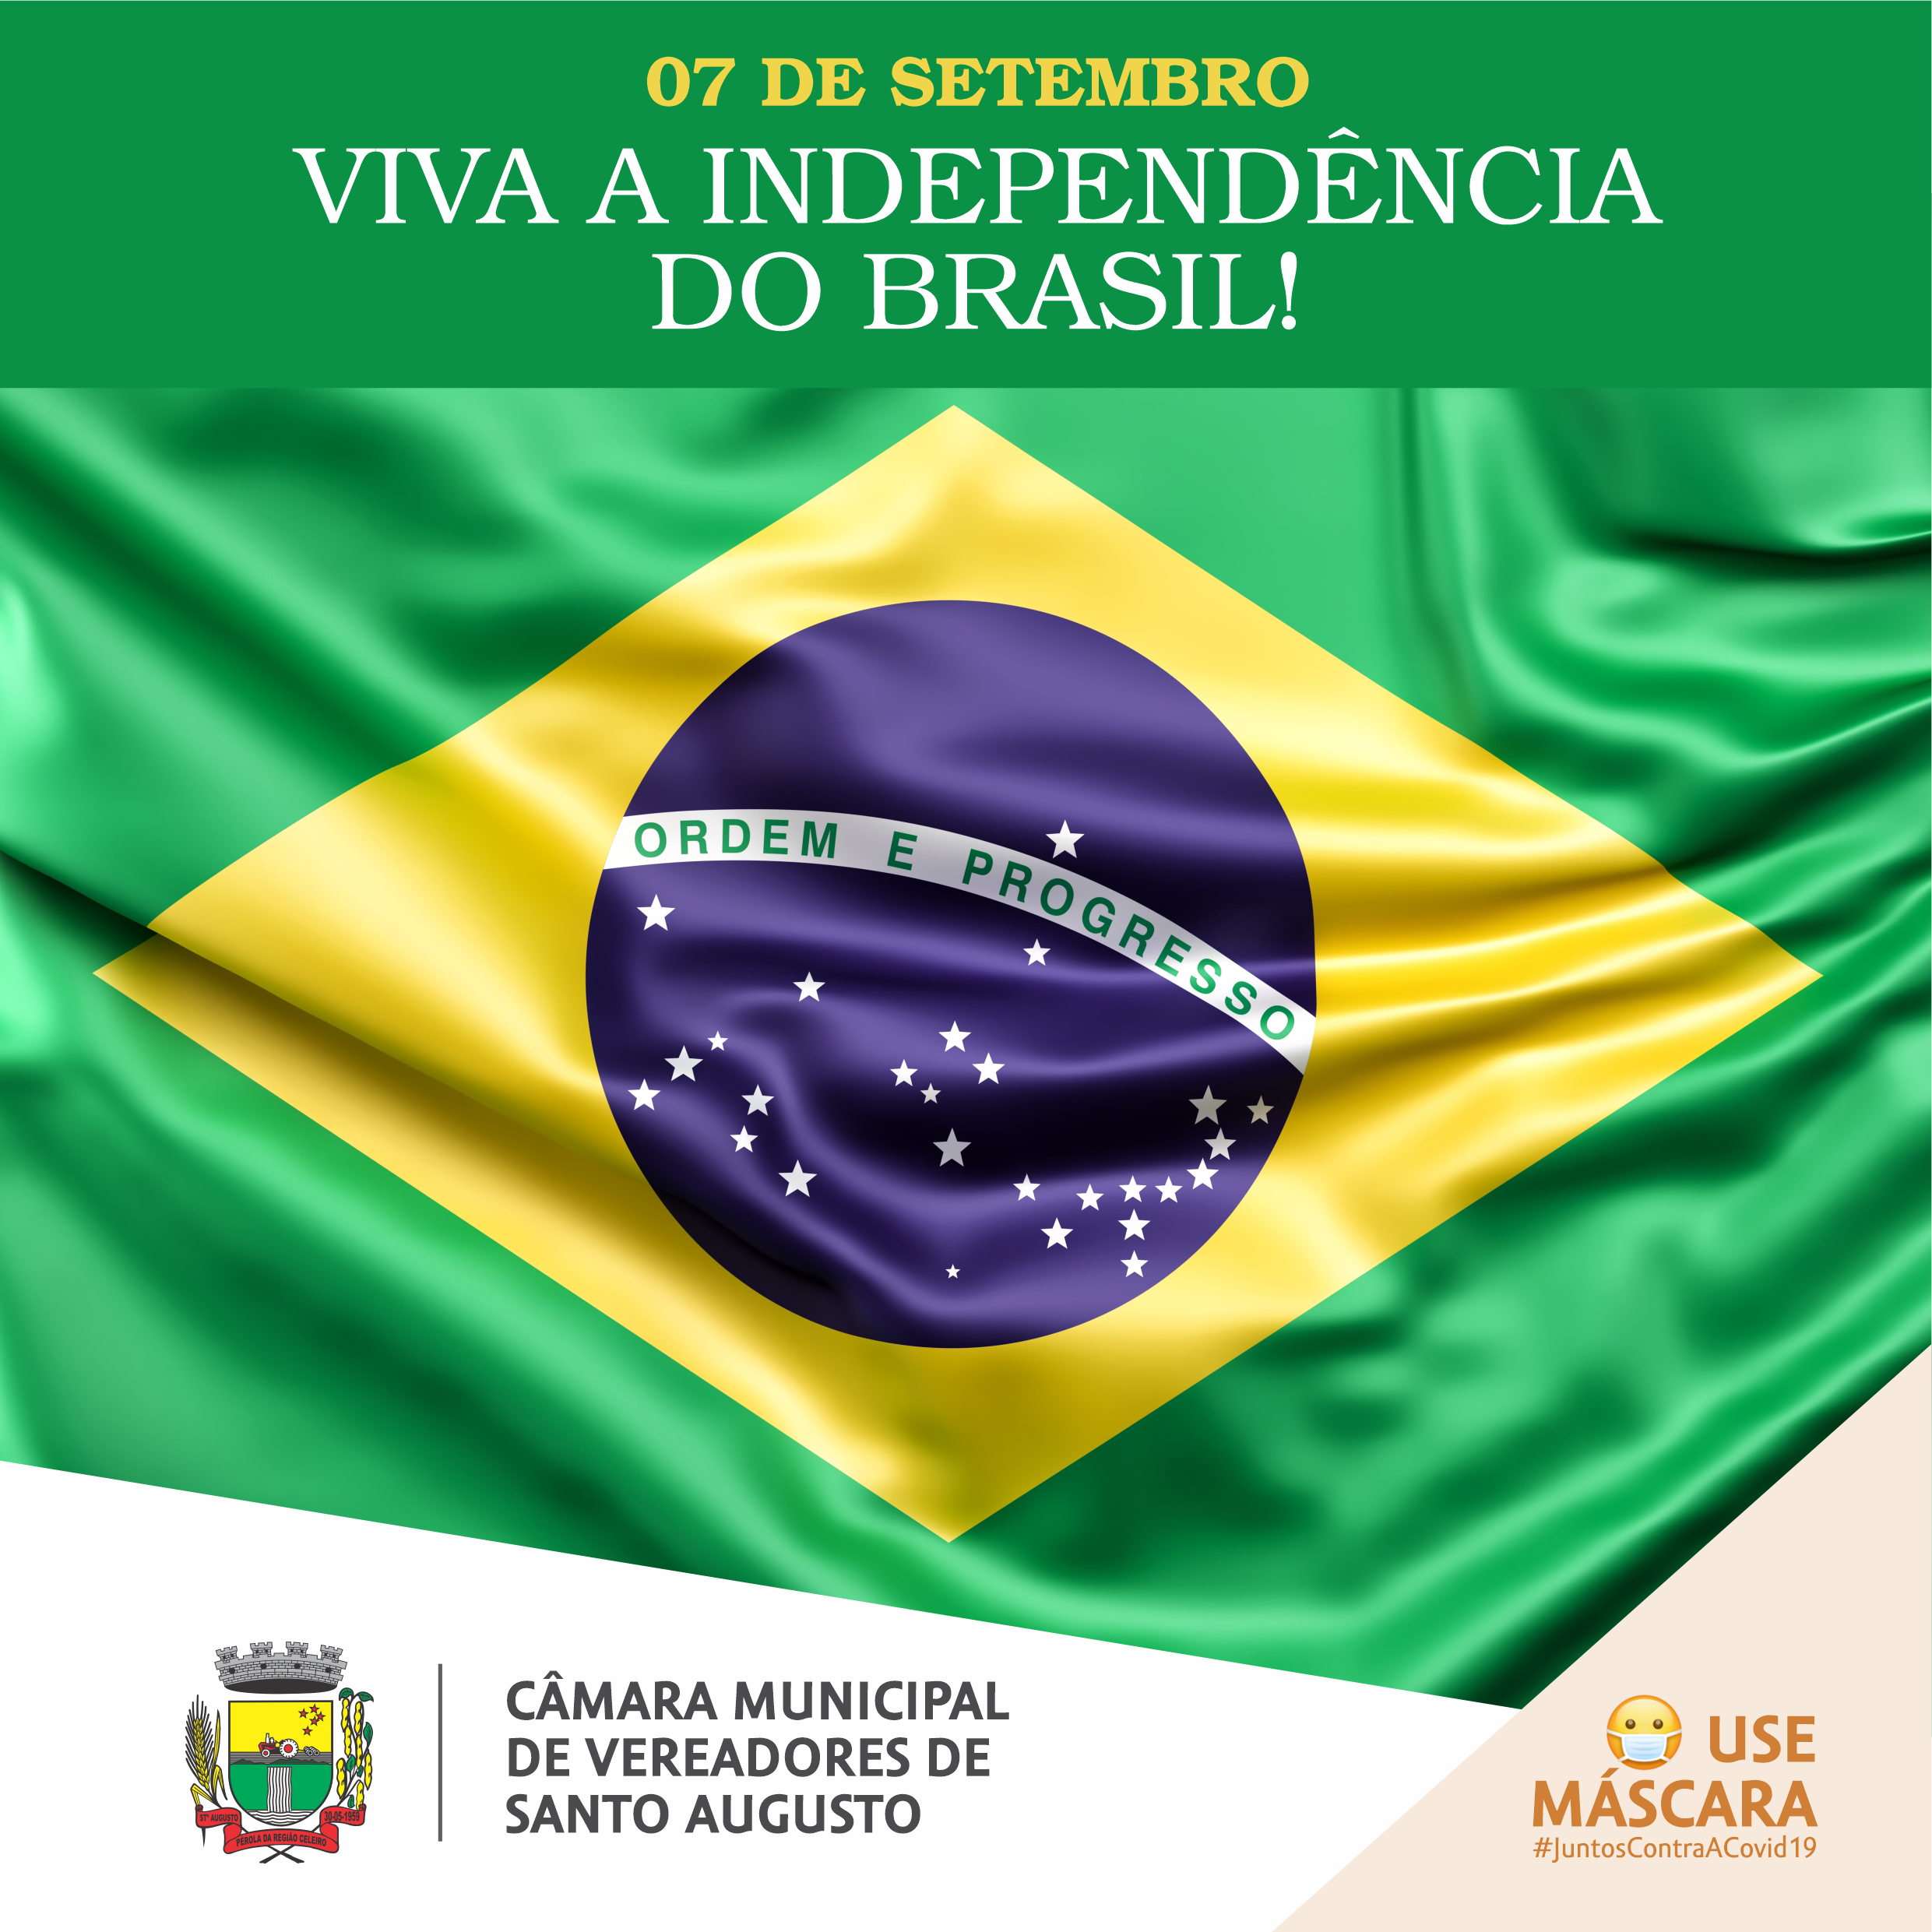 VIVA A INDEPENDÊNCIA DO BRASIL!